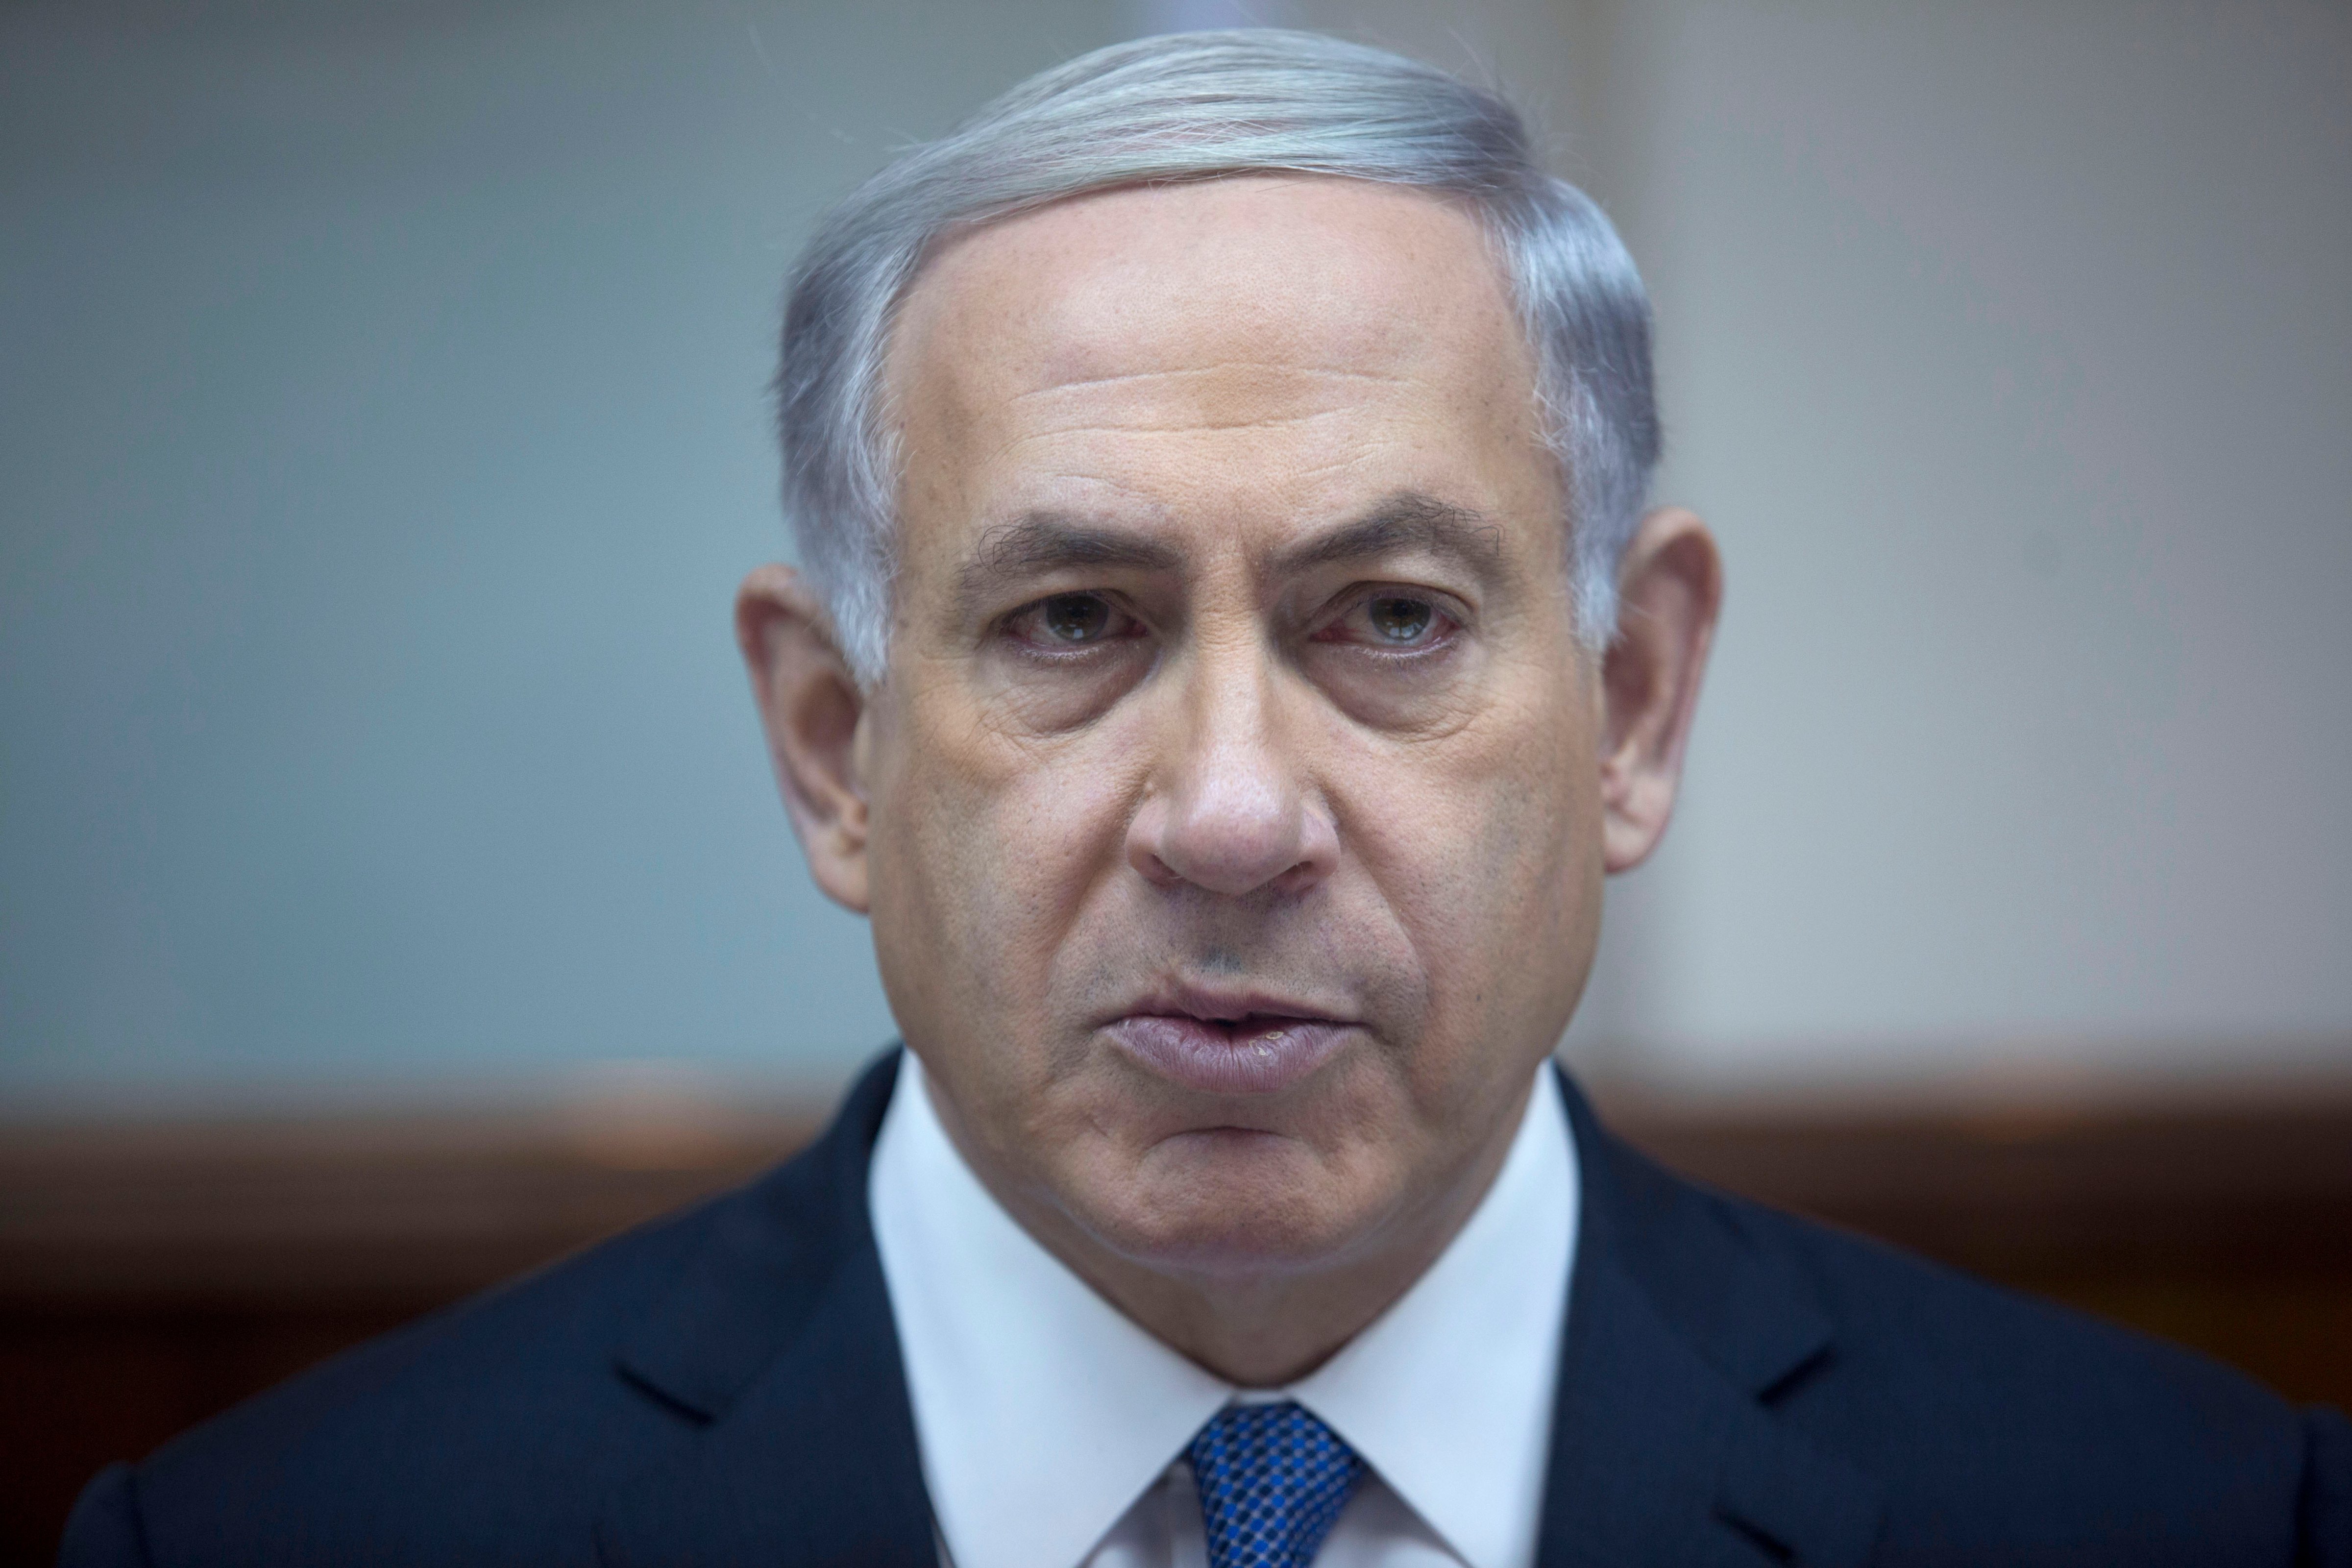 Israel's Prime Minister Benjamin Netanyahu in Jerusalem Feb. 15, 2015